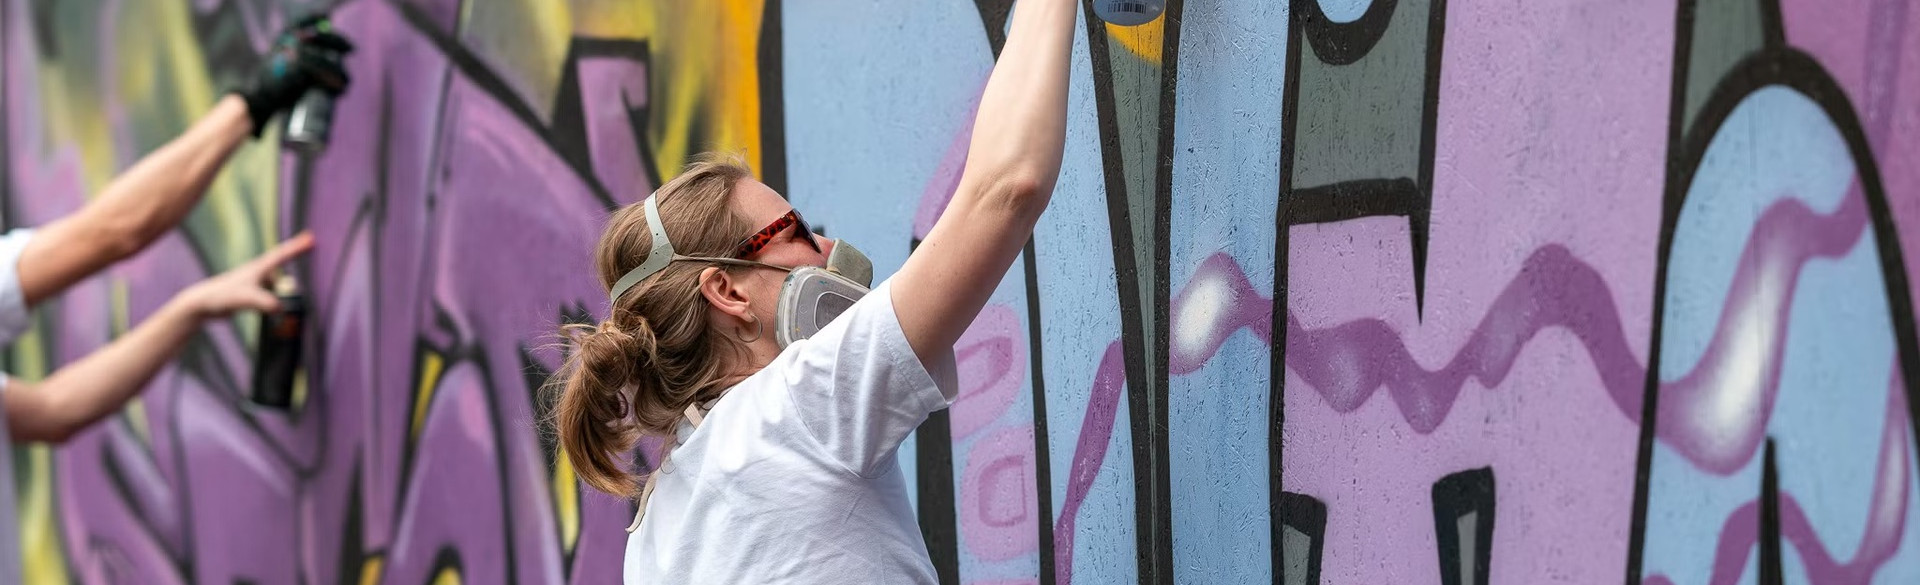 Person bemalt die Wand mit Graffiti